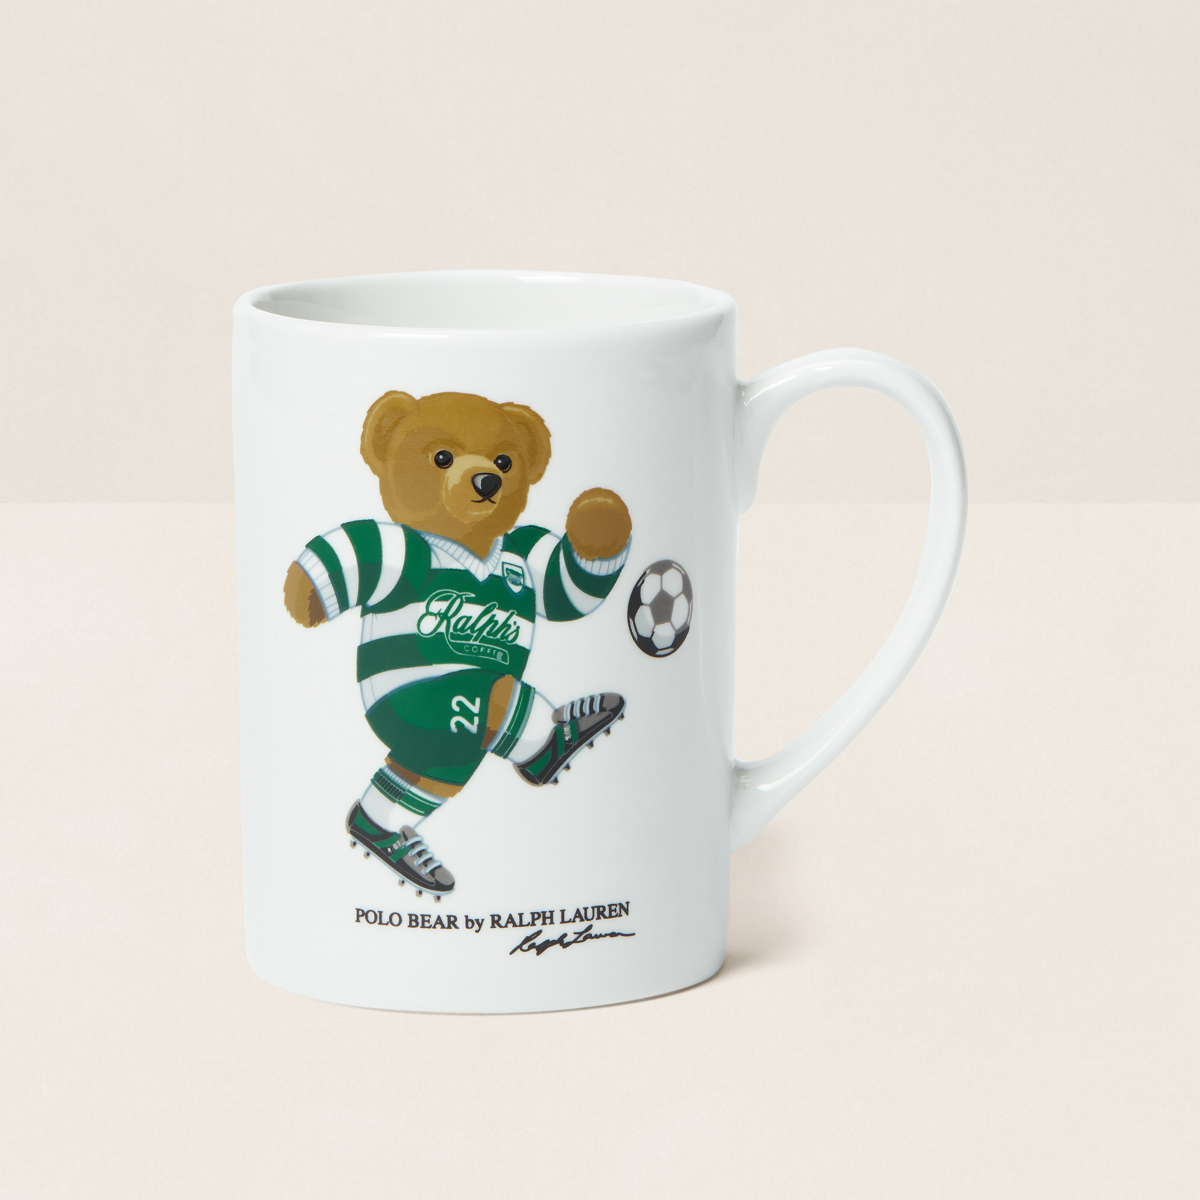 Little Bear Large Coffee Mug 15 Oz